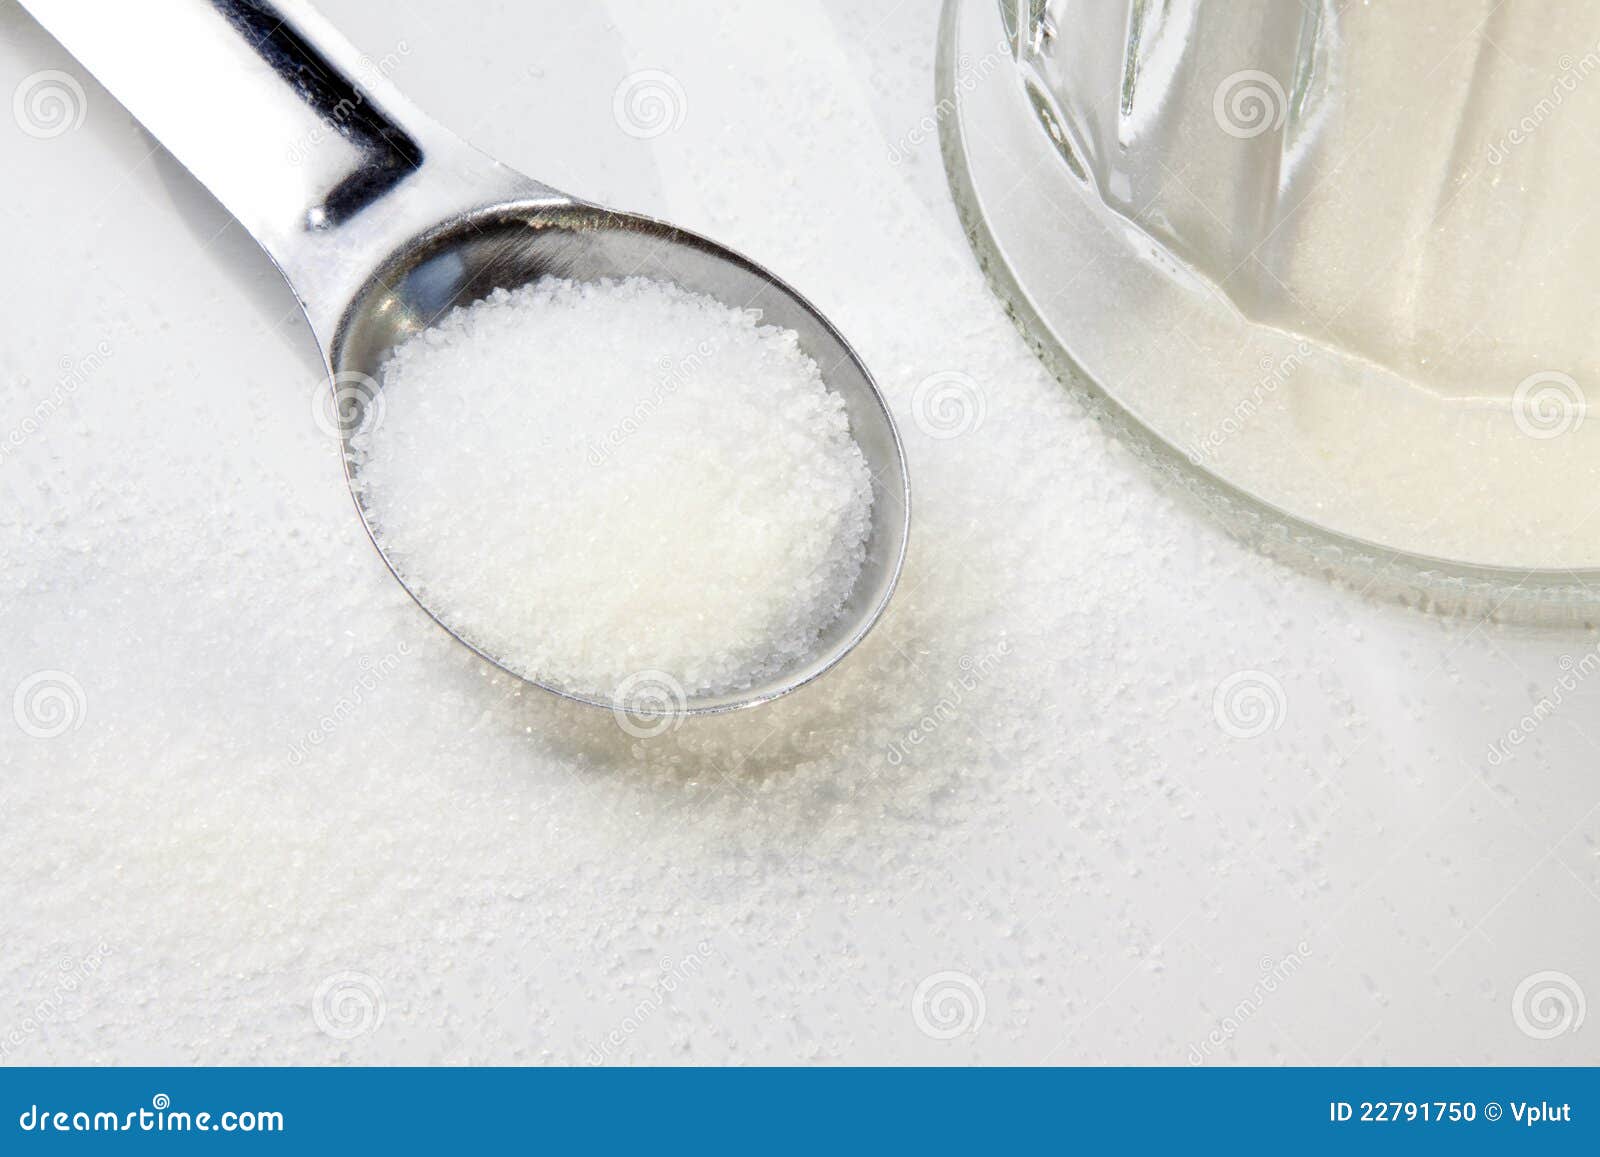 a teaspoon of sugar